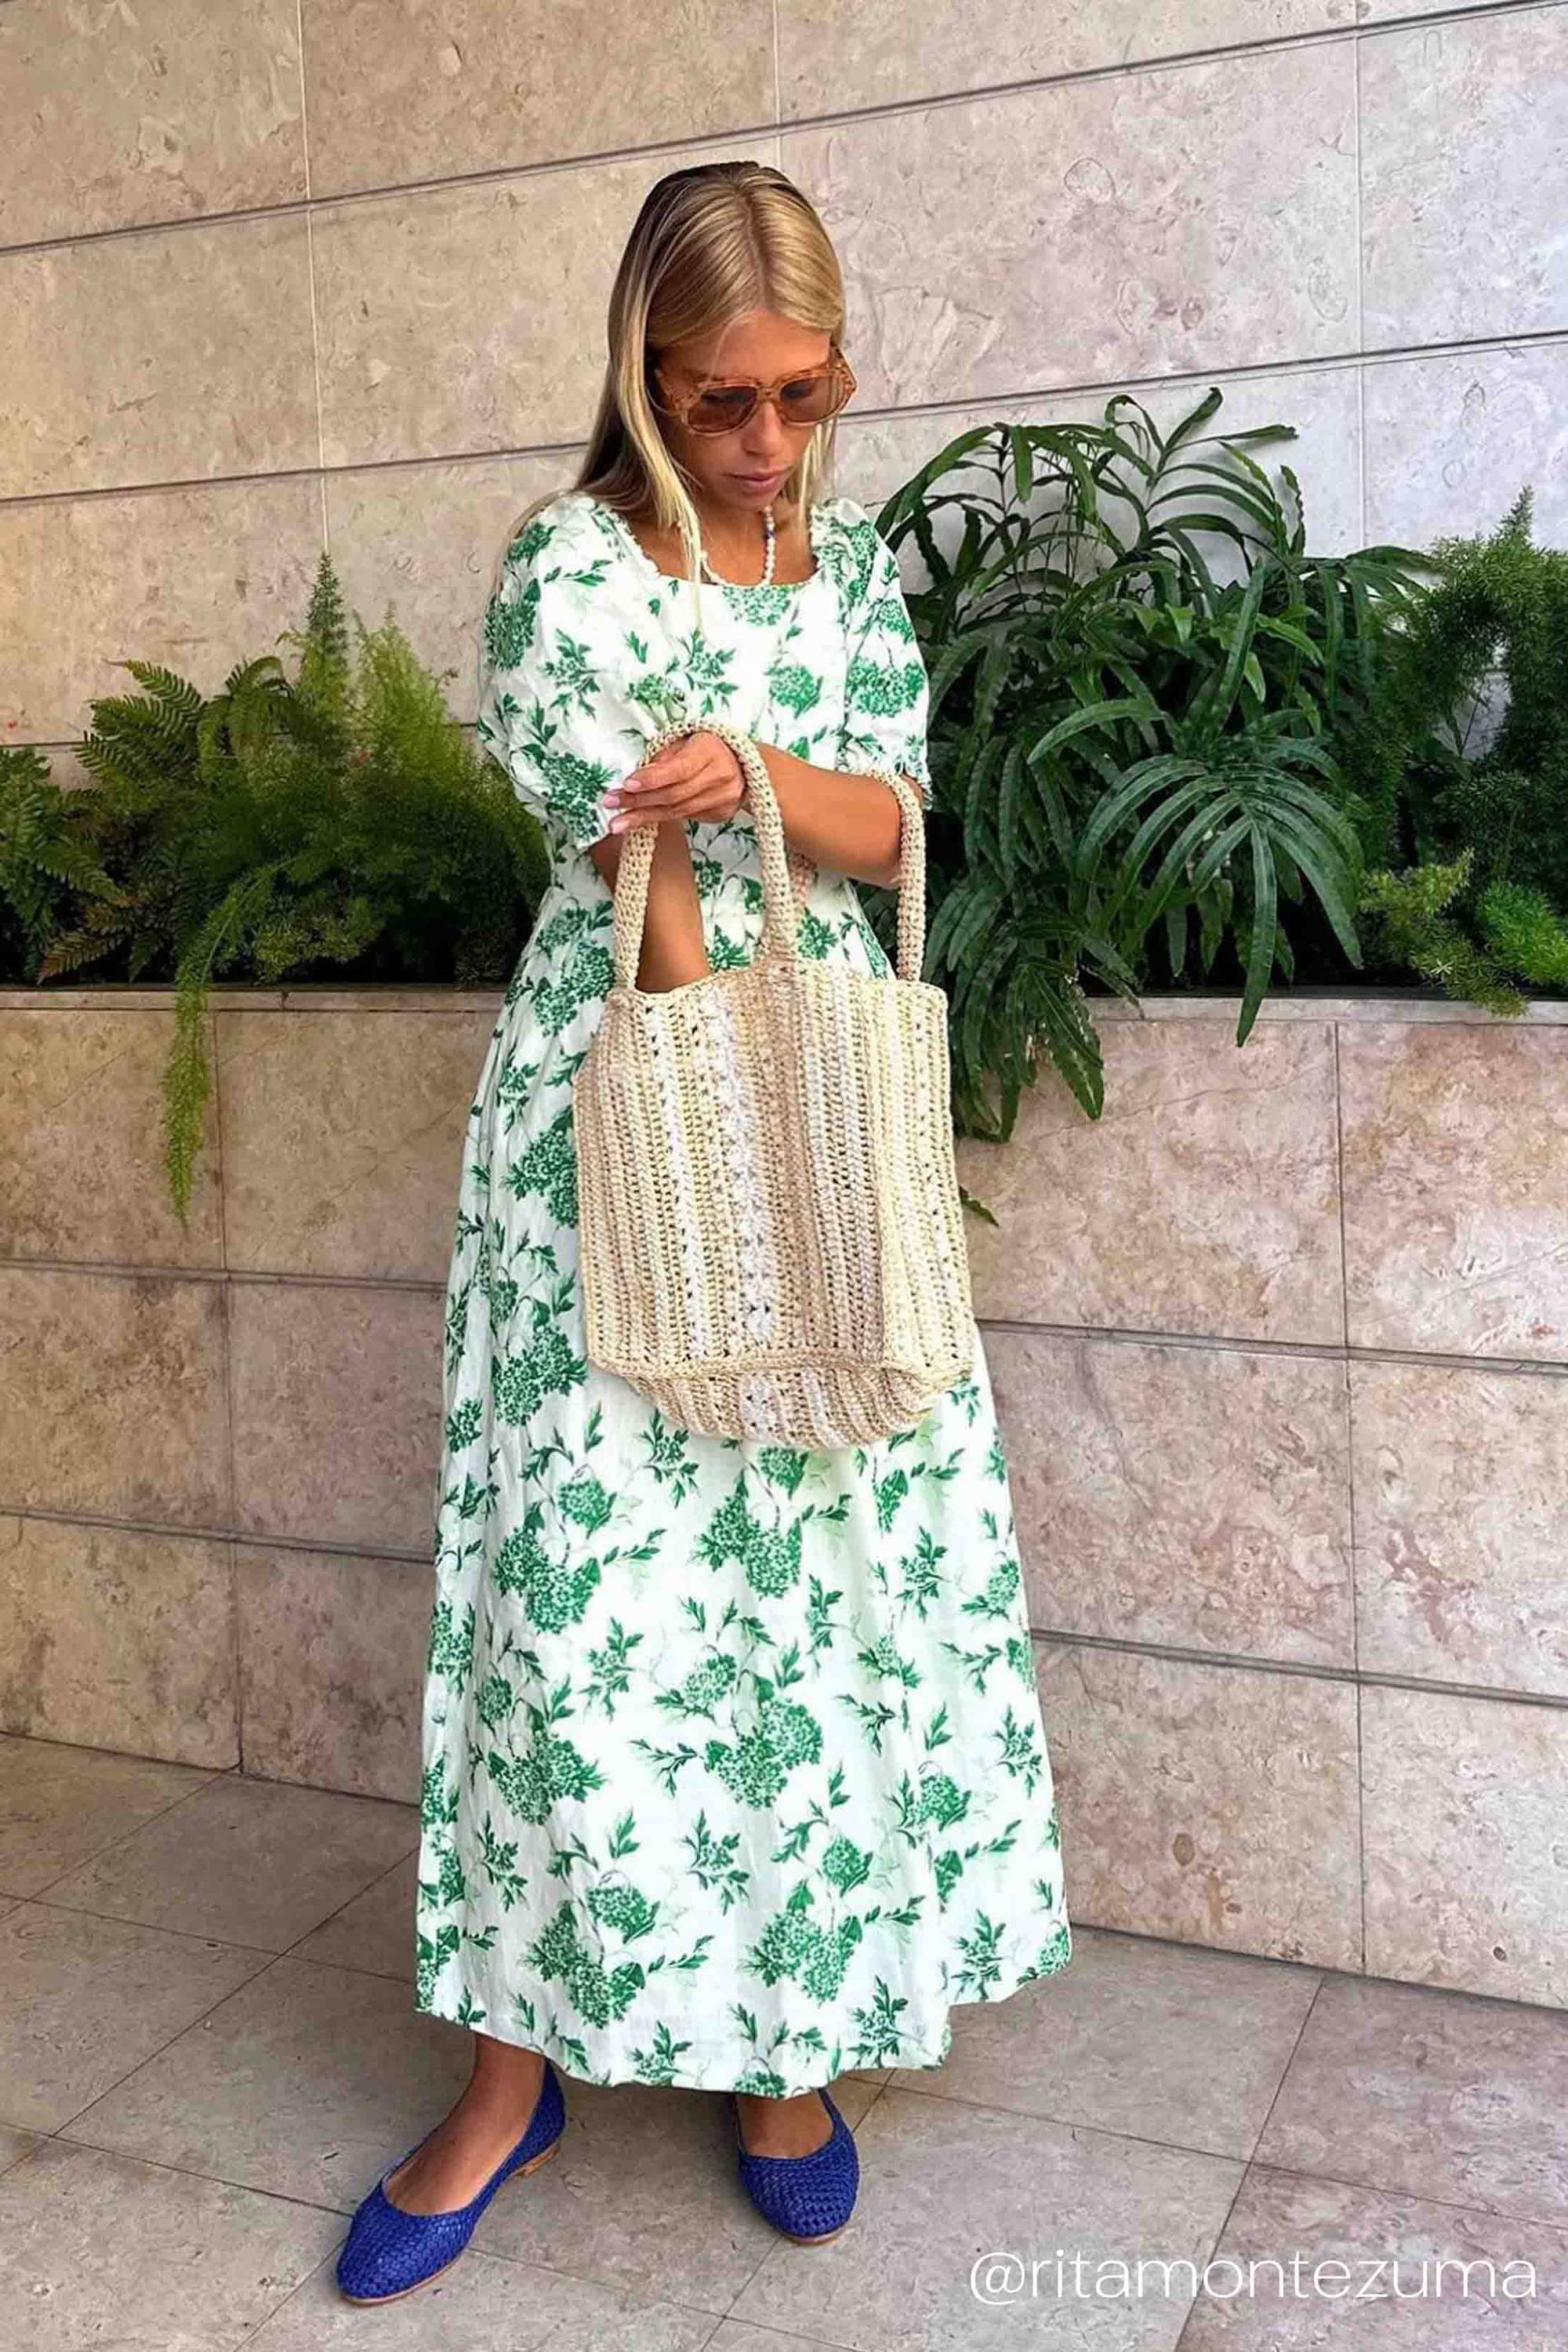 Influencer Rita Montezuma wears the Yolke Sophia floral linen dress